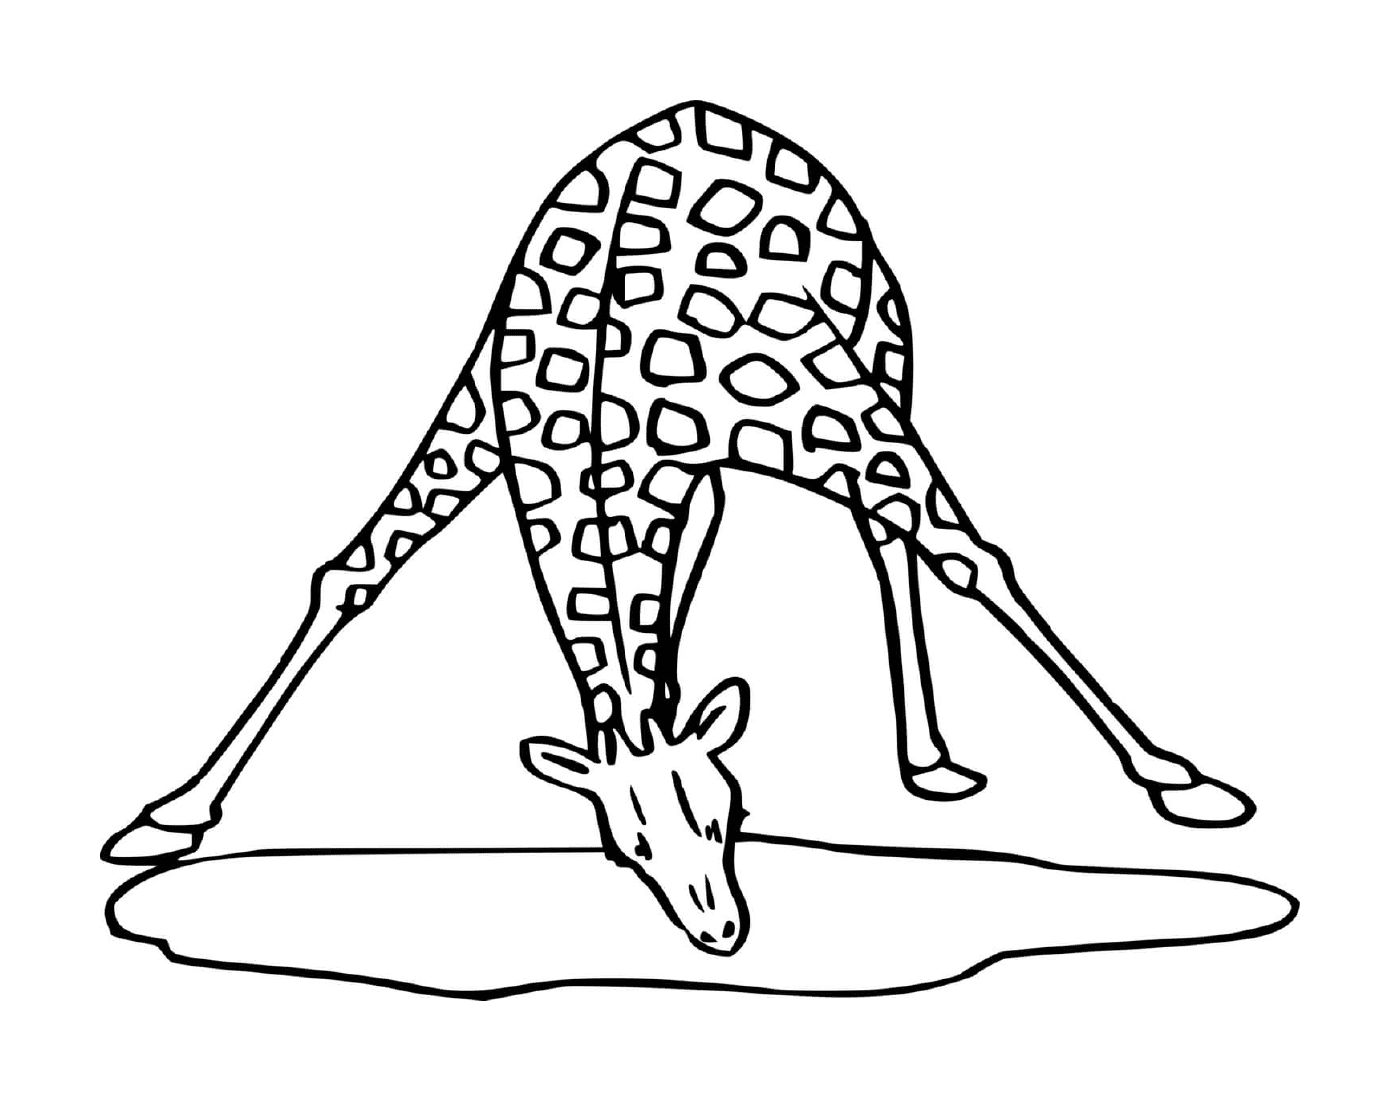  Acqua potabile Girafe 